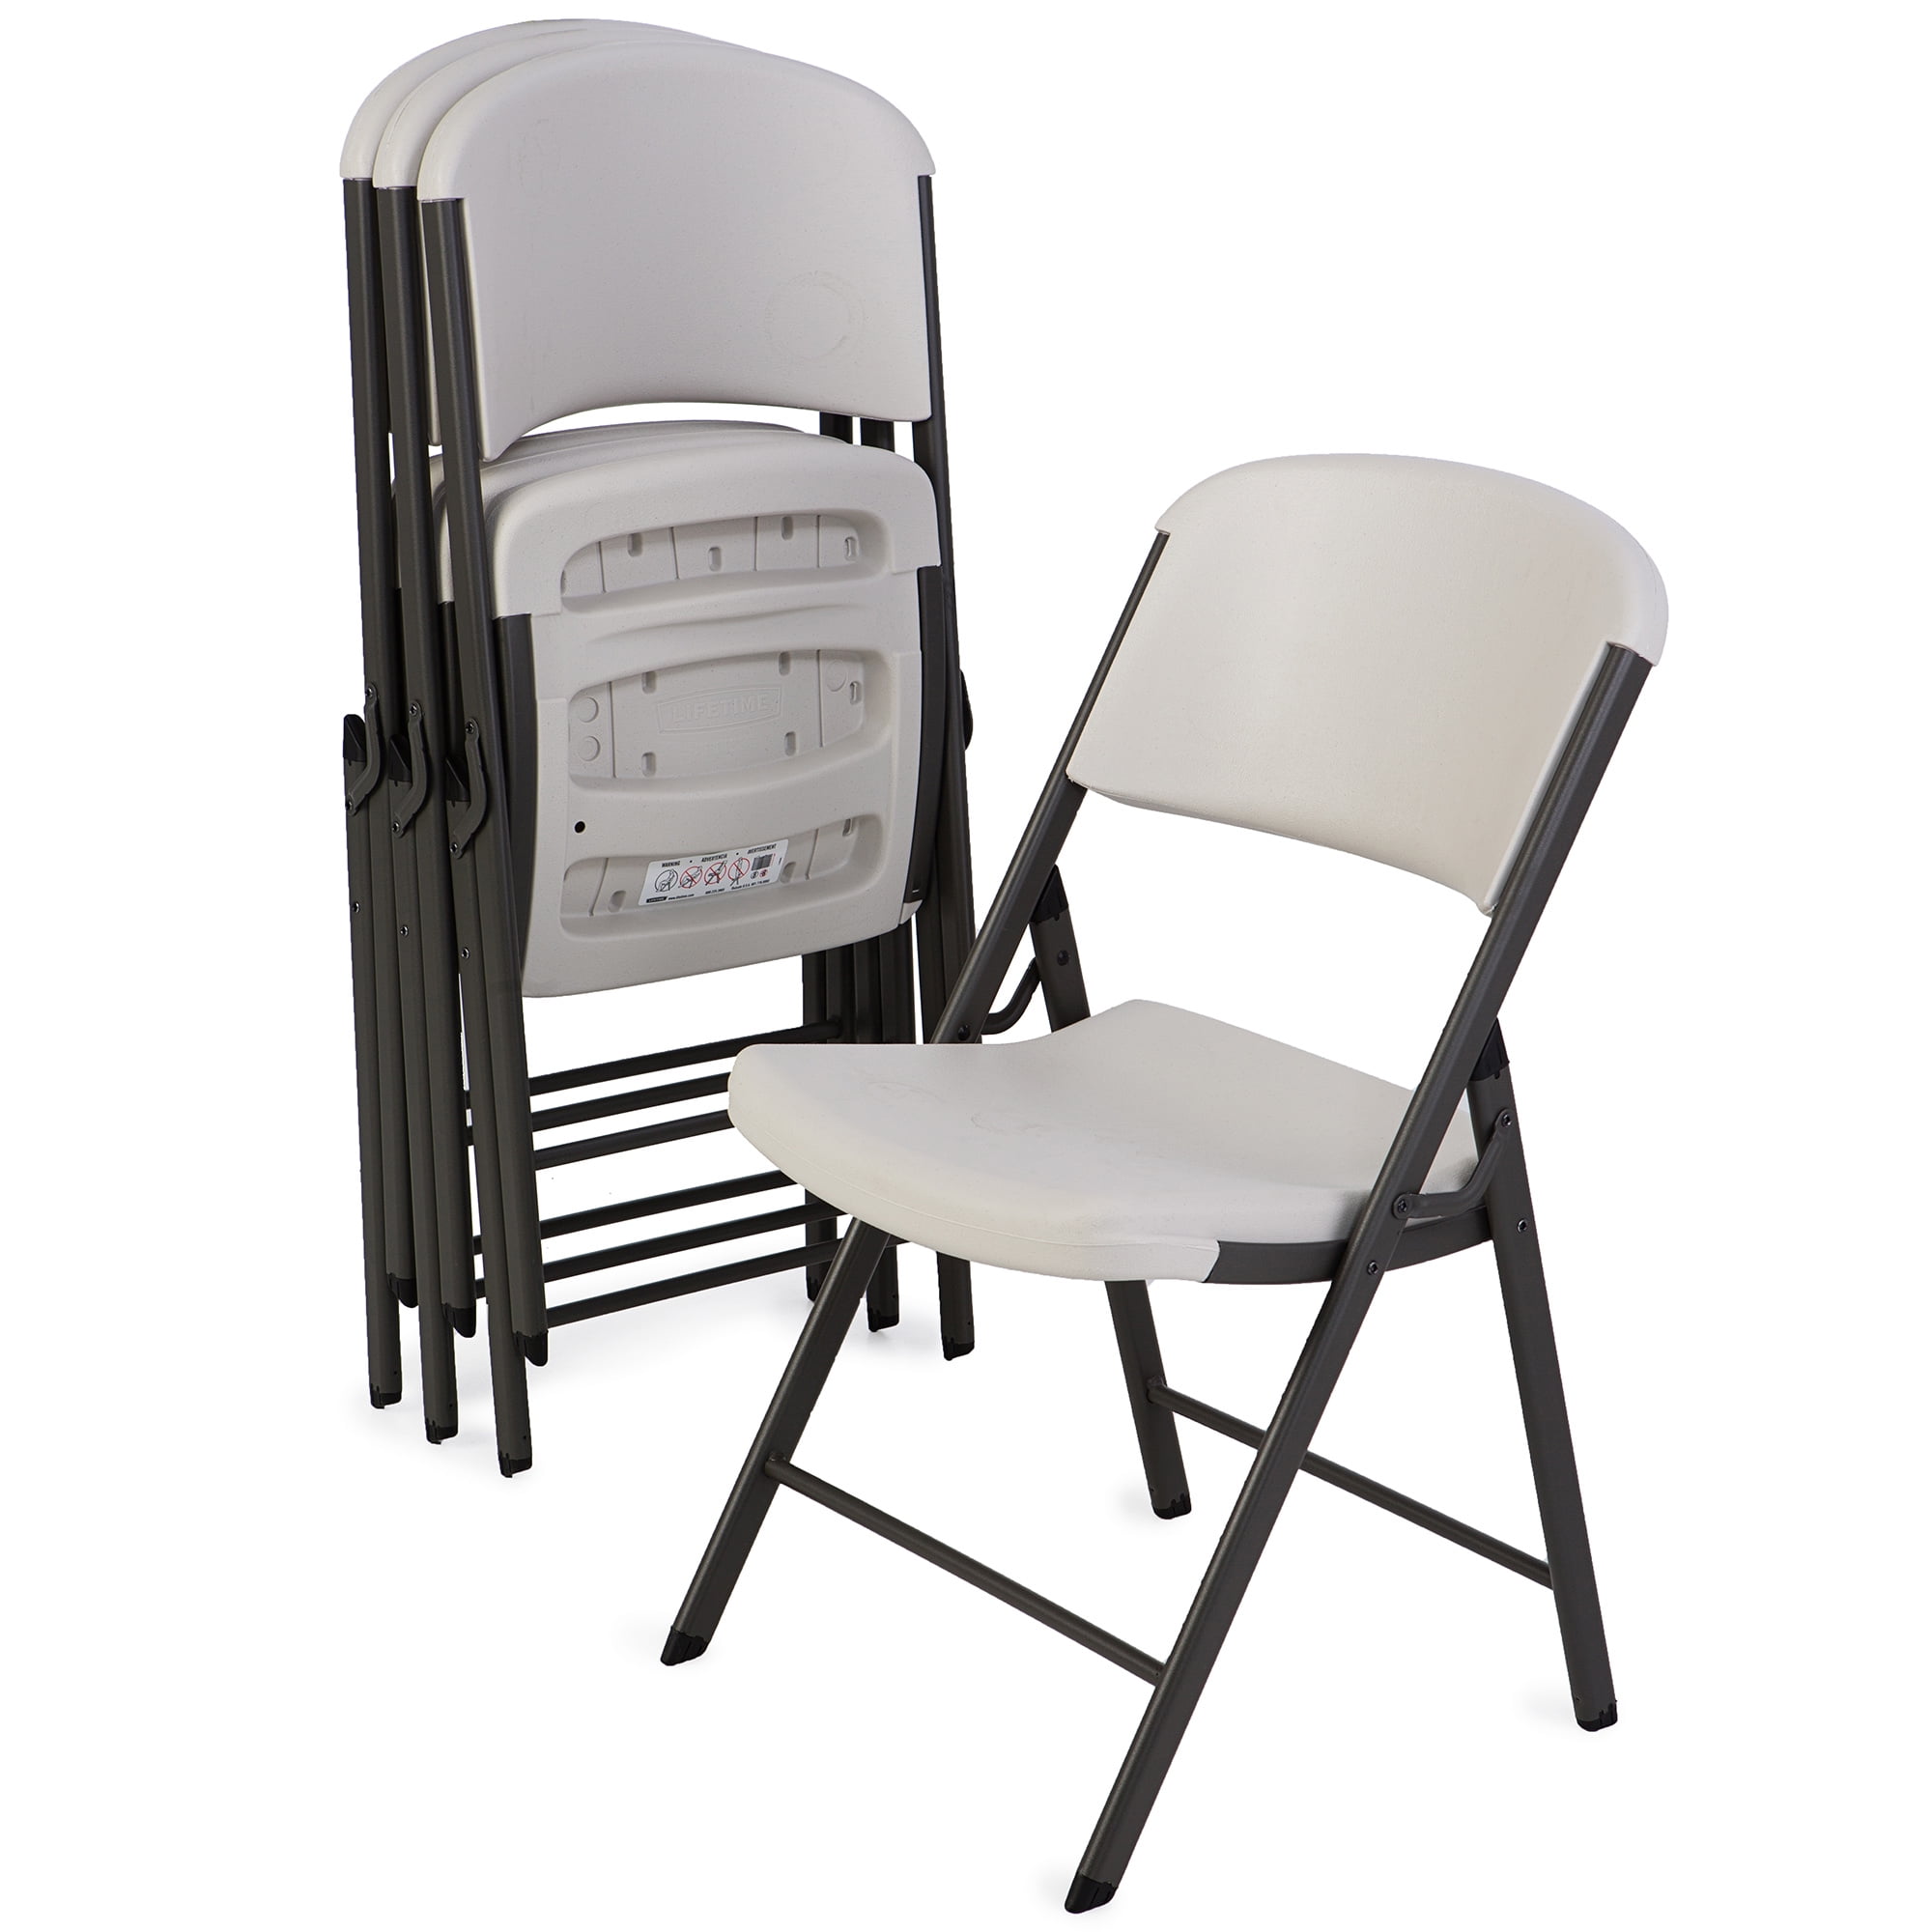 Lifetime Classic Folding Chair (4 Pack), Almond - Walmart.com - Walmart.com